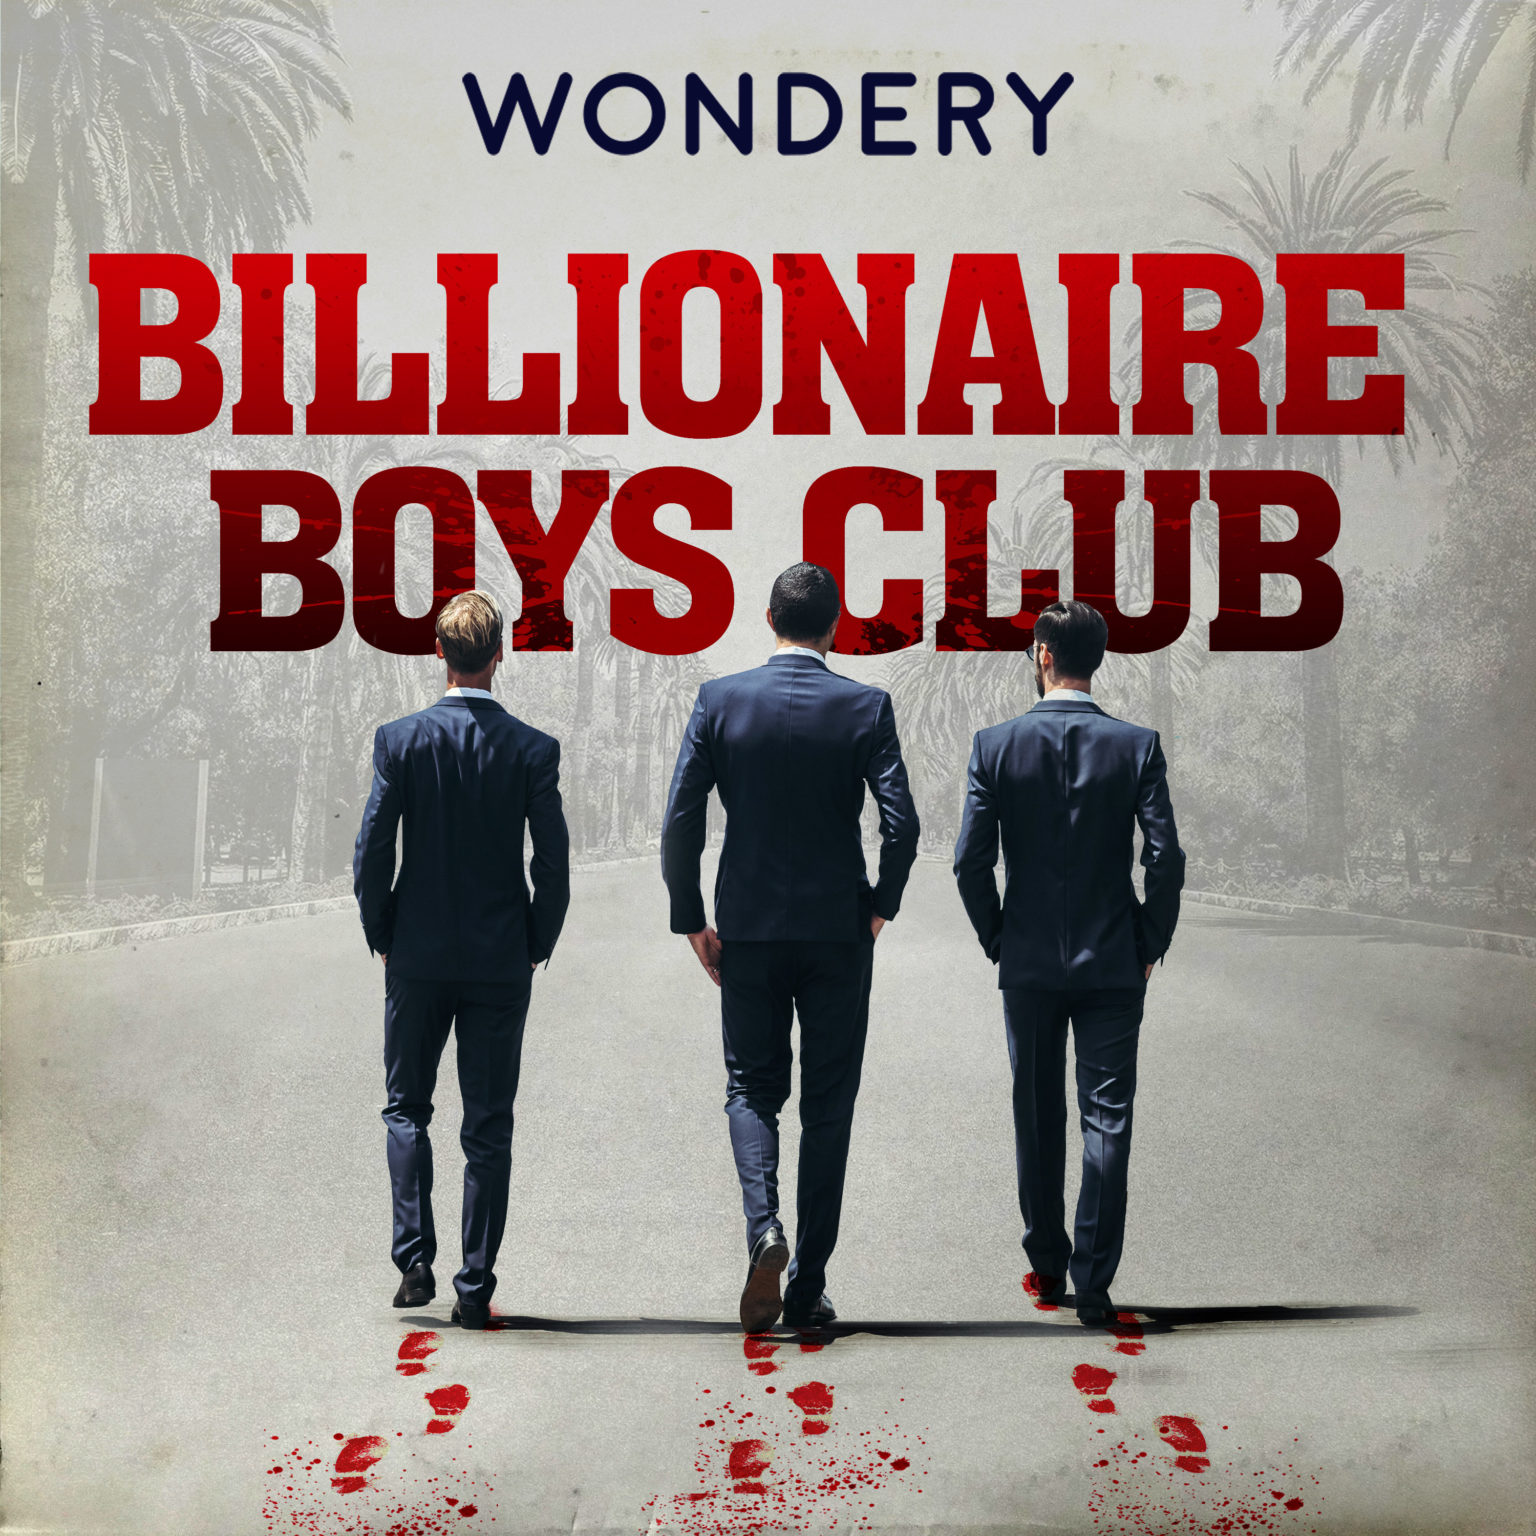 Joe Hunt turns investing into murder in 'Billionaire Boys Club' podcast